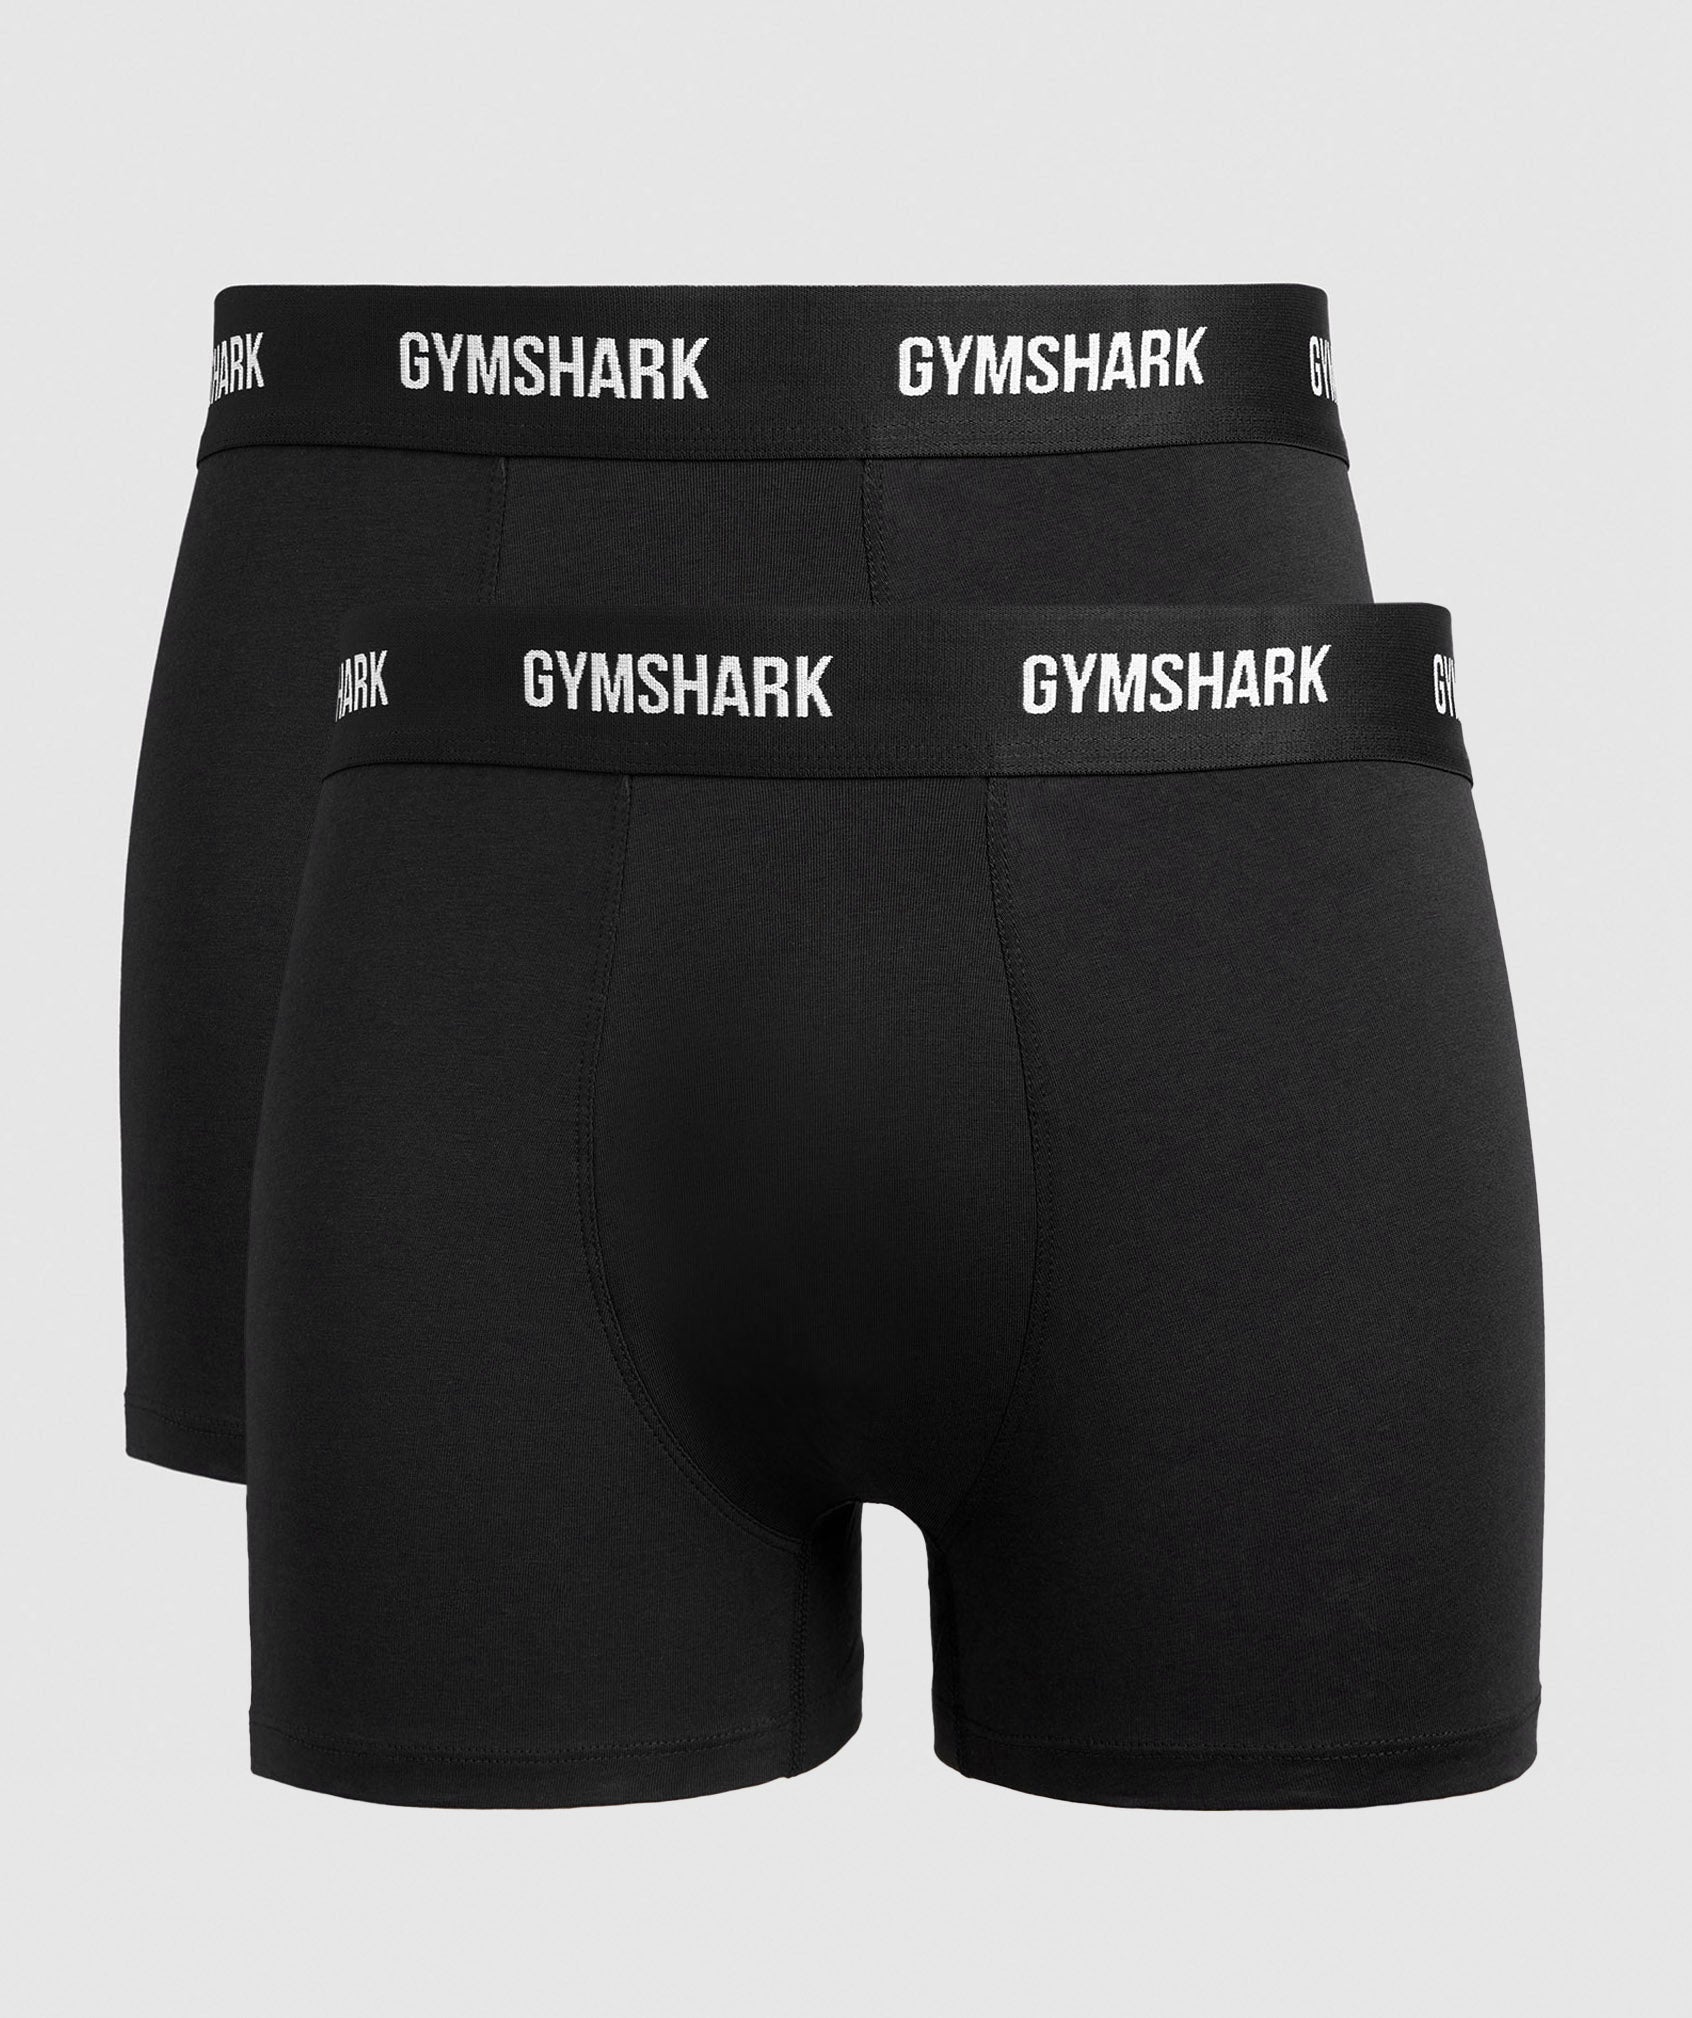 Gymshark, Intimates & Sleepwear